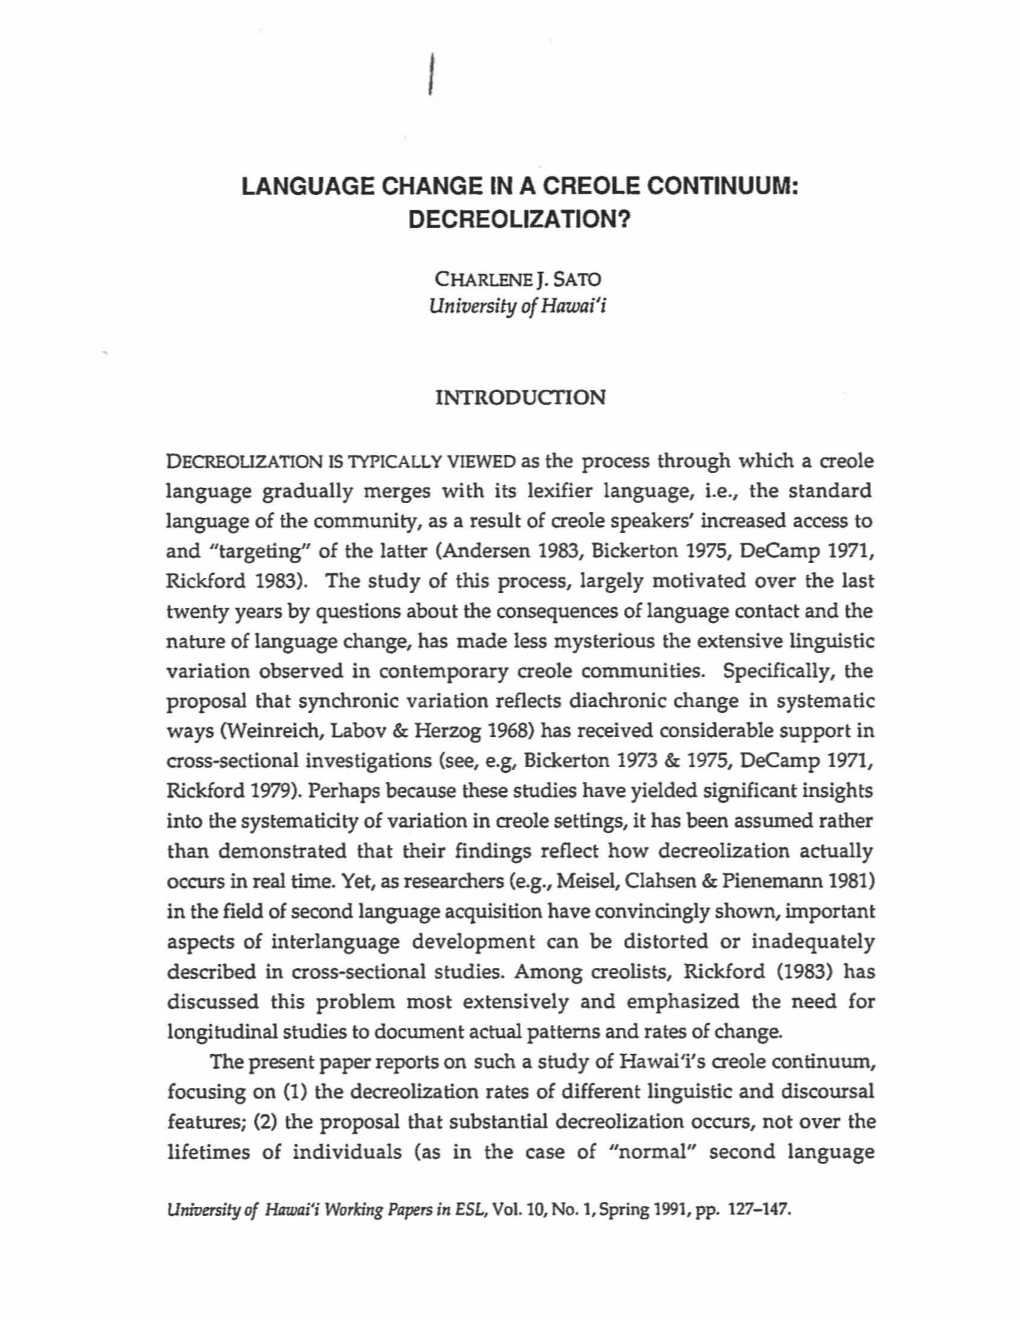 Language Change in a Creole Continuum: Decreolization?